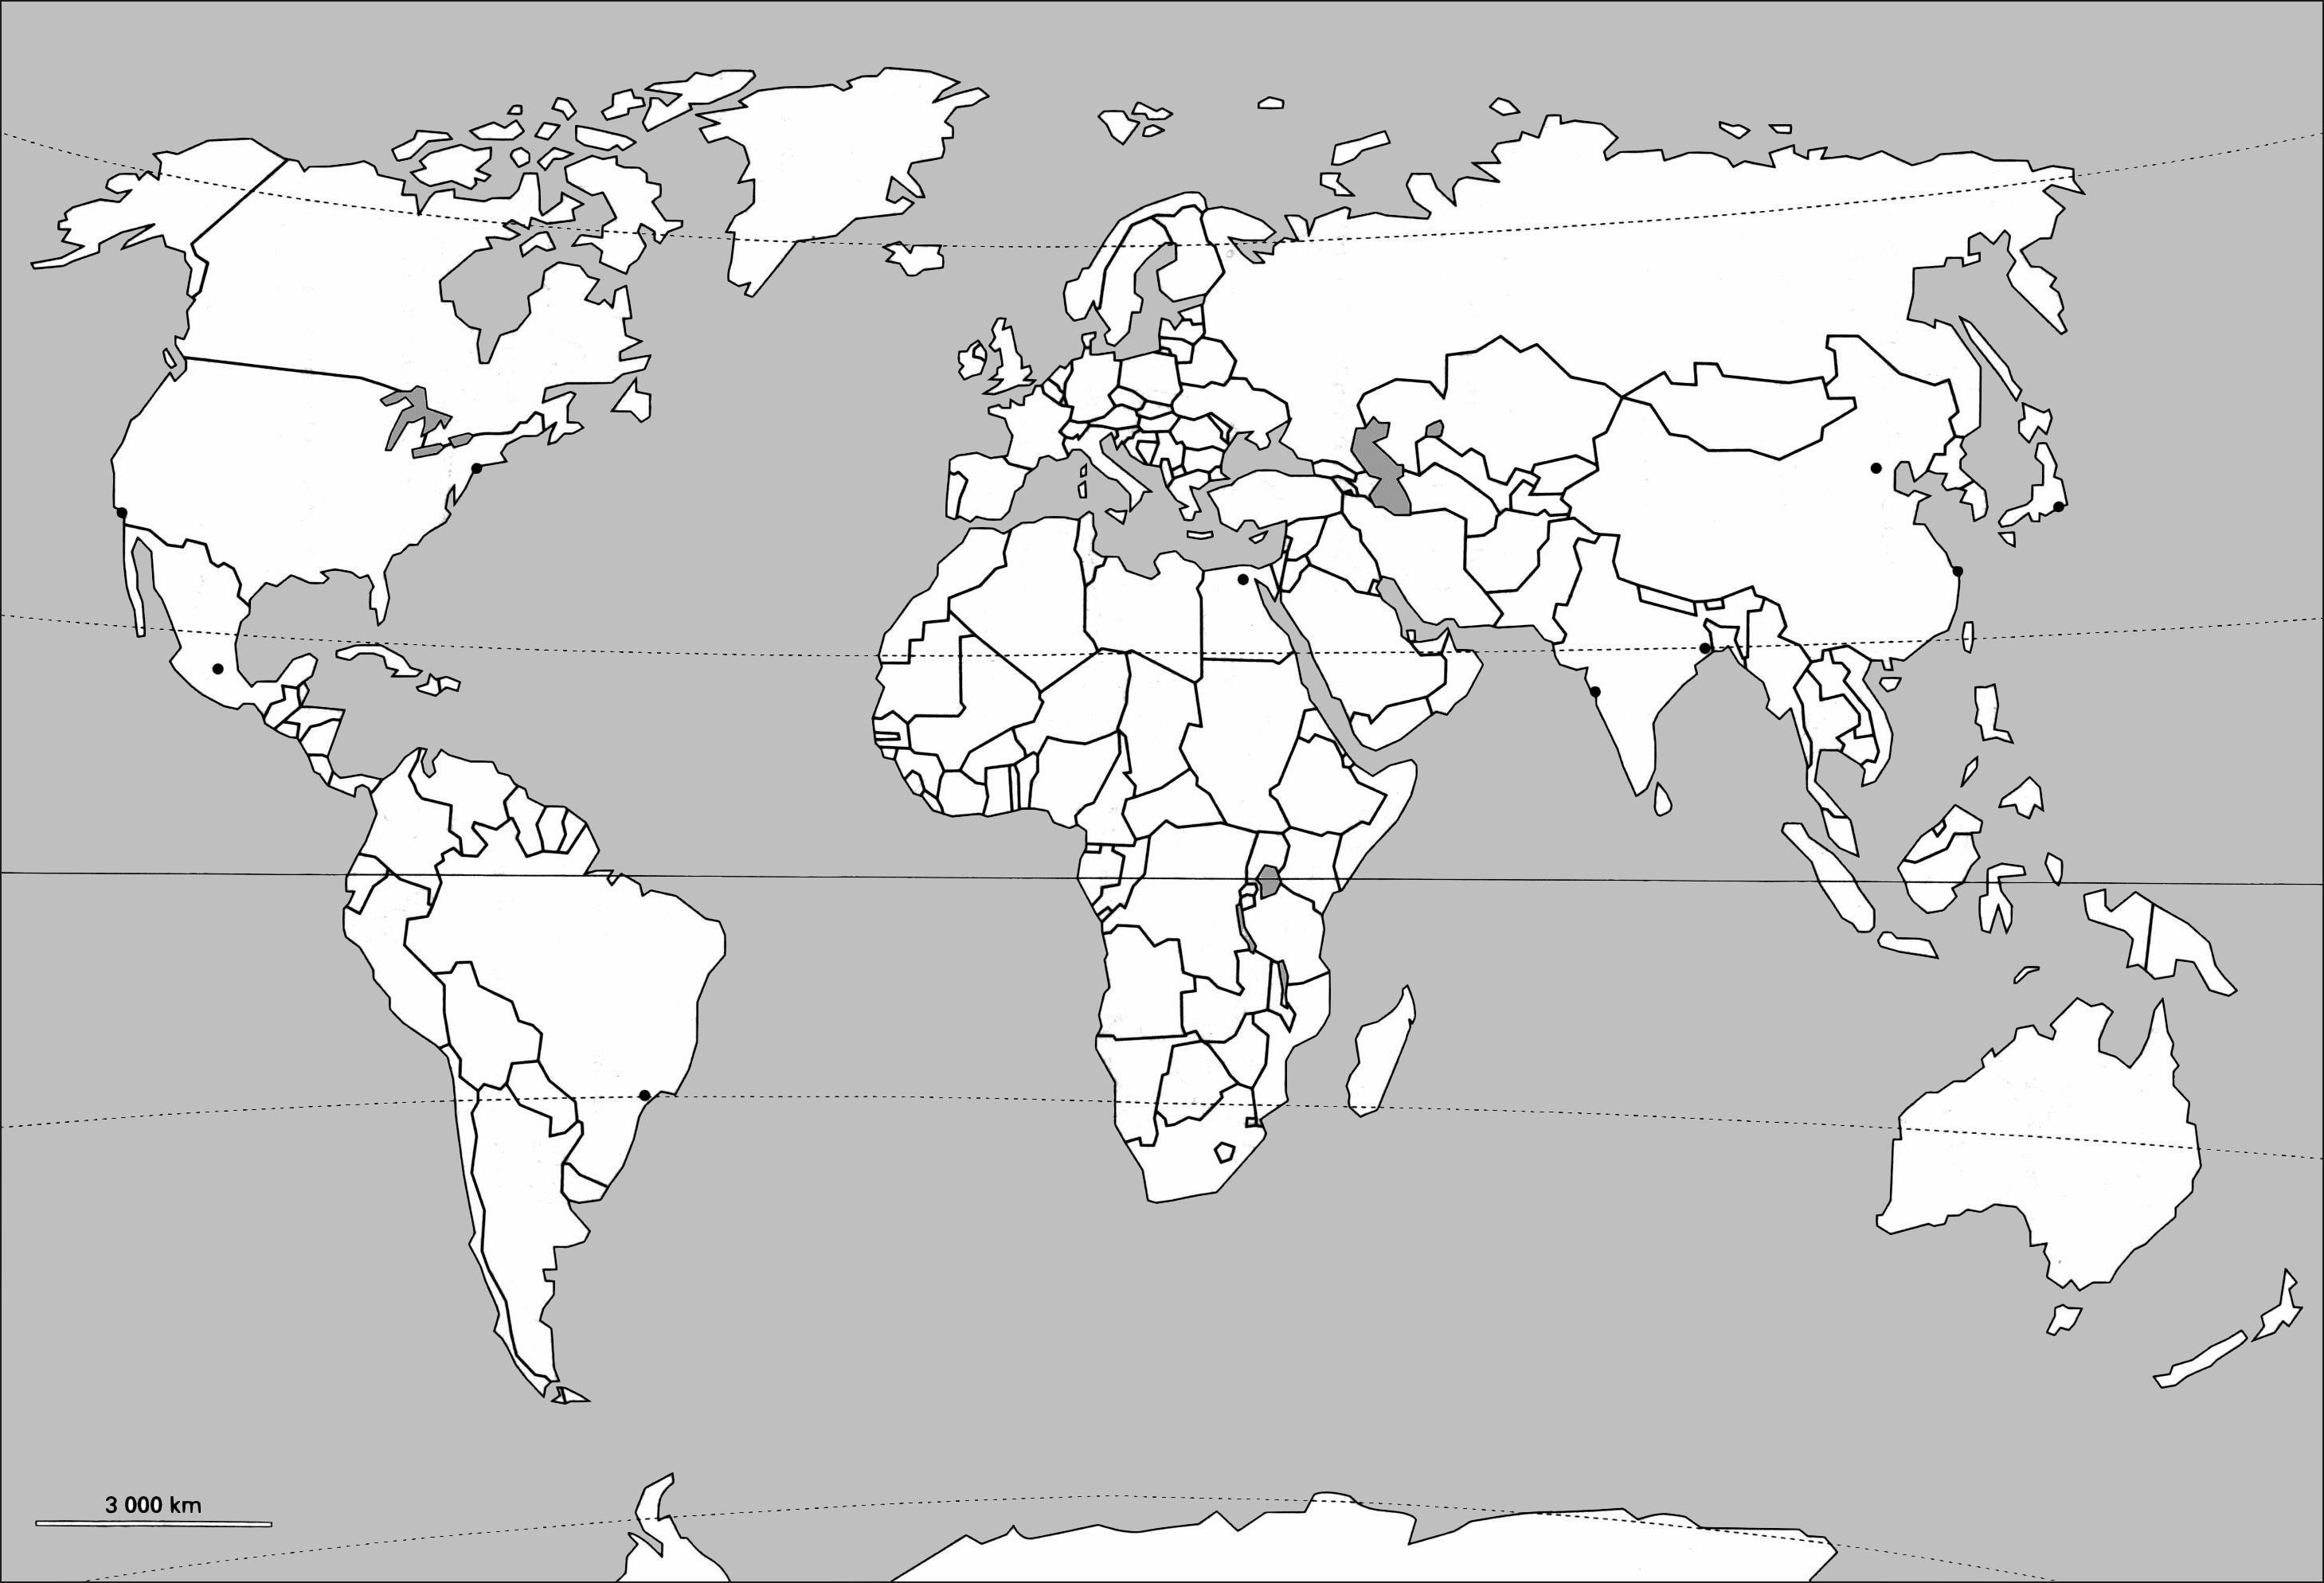 Cartograf.fr : Carte du monde : Grande carte du monde avec pays